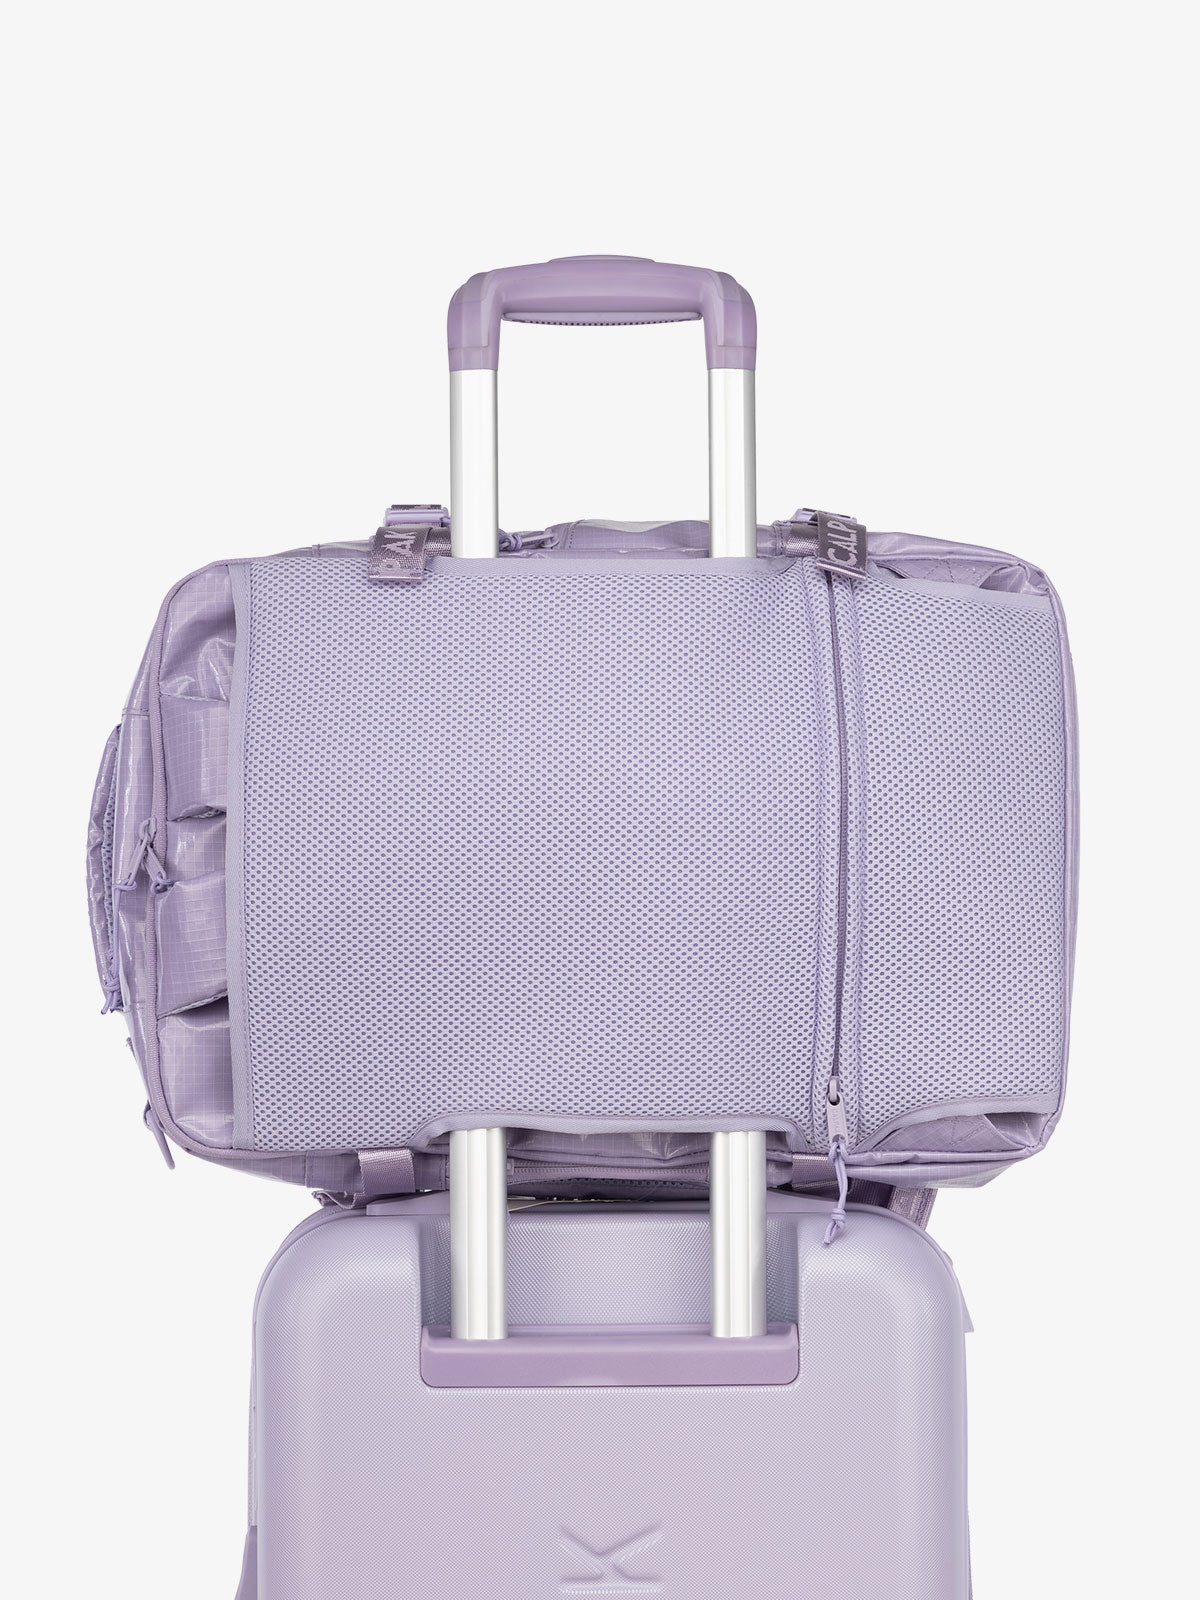 CALPAK Terra 26L Laptop Backpack Duffel with luggage trolley sleeve in purple